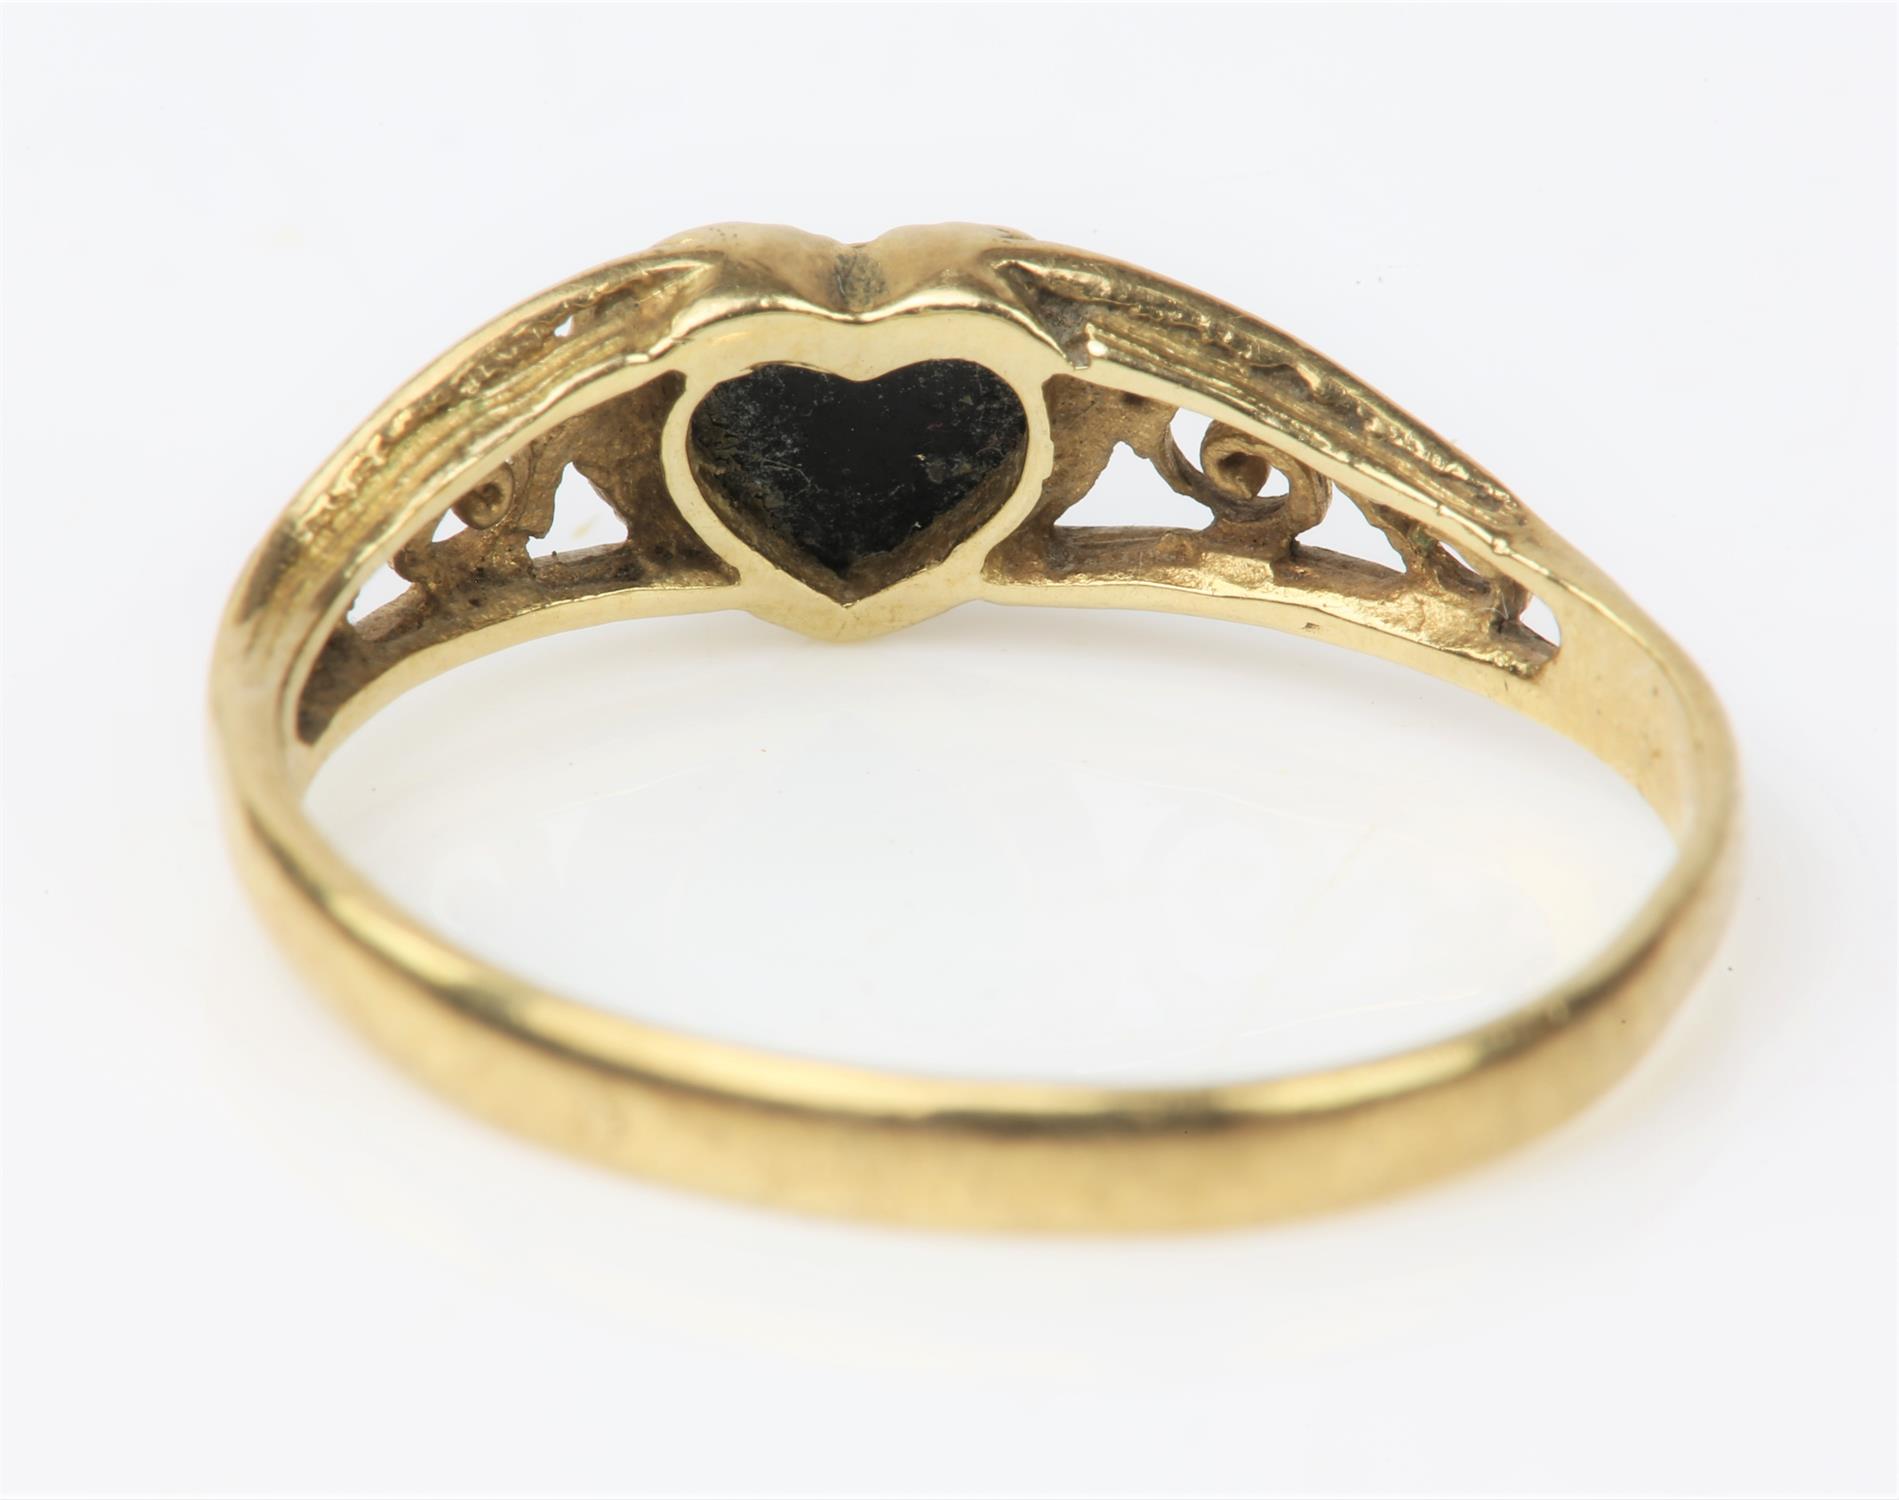 9 carat gold heart stone set ring 1.21 grams - Image 3 of 4